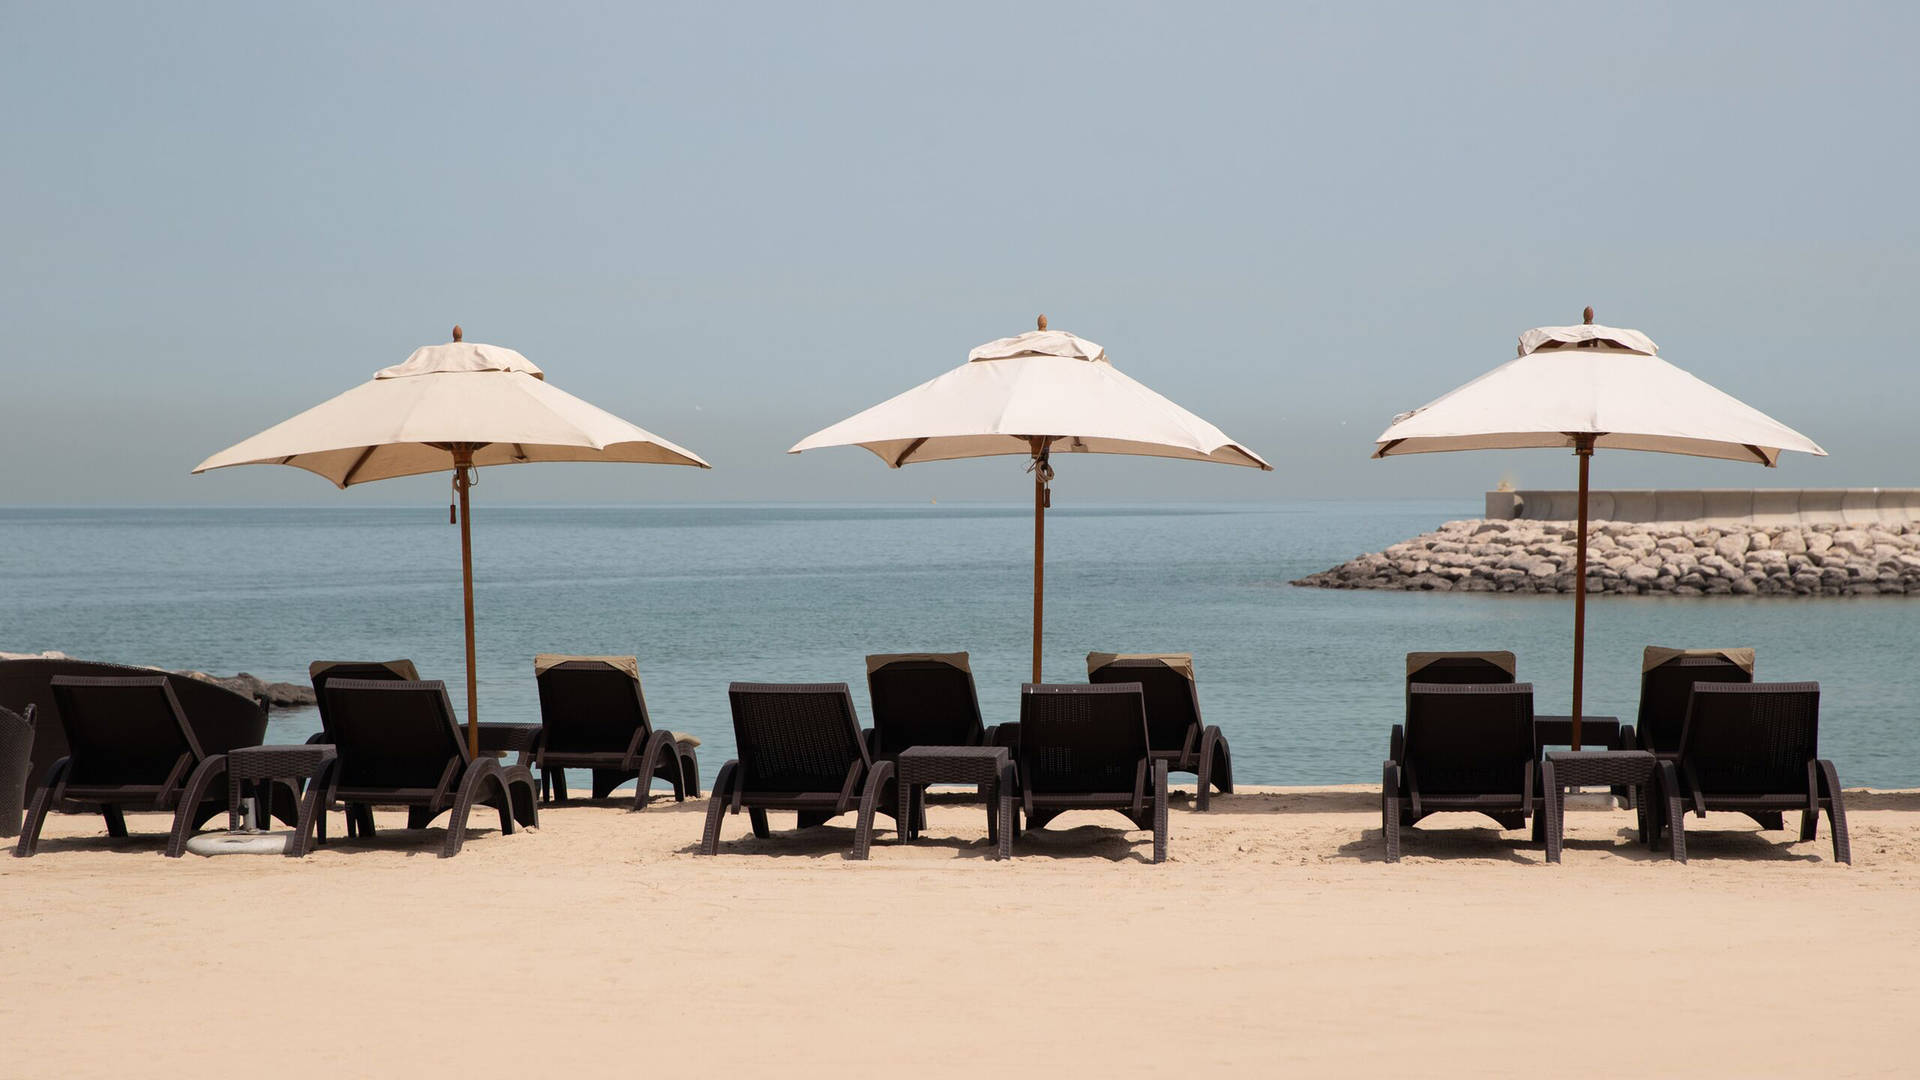 Jumeirah Messilah Beach Hotel loungers